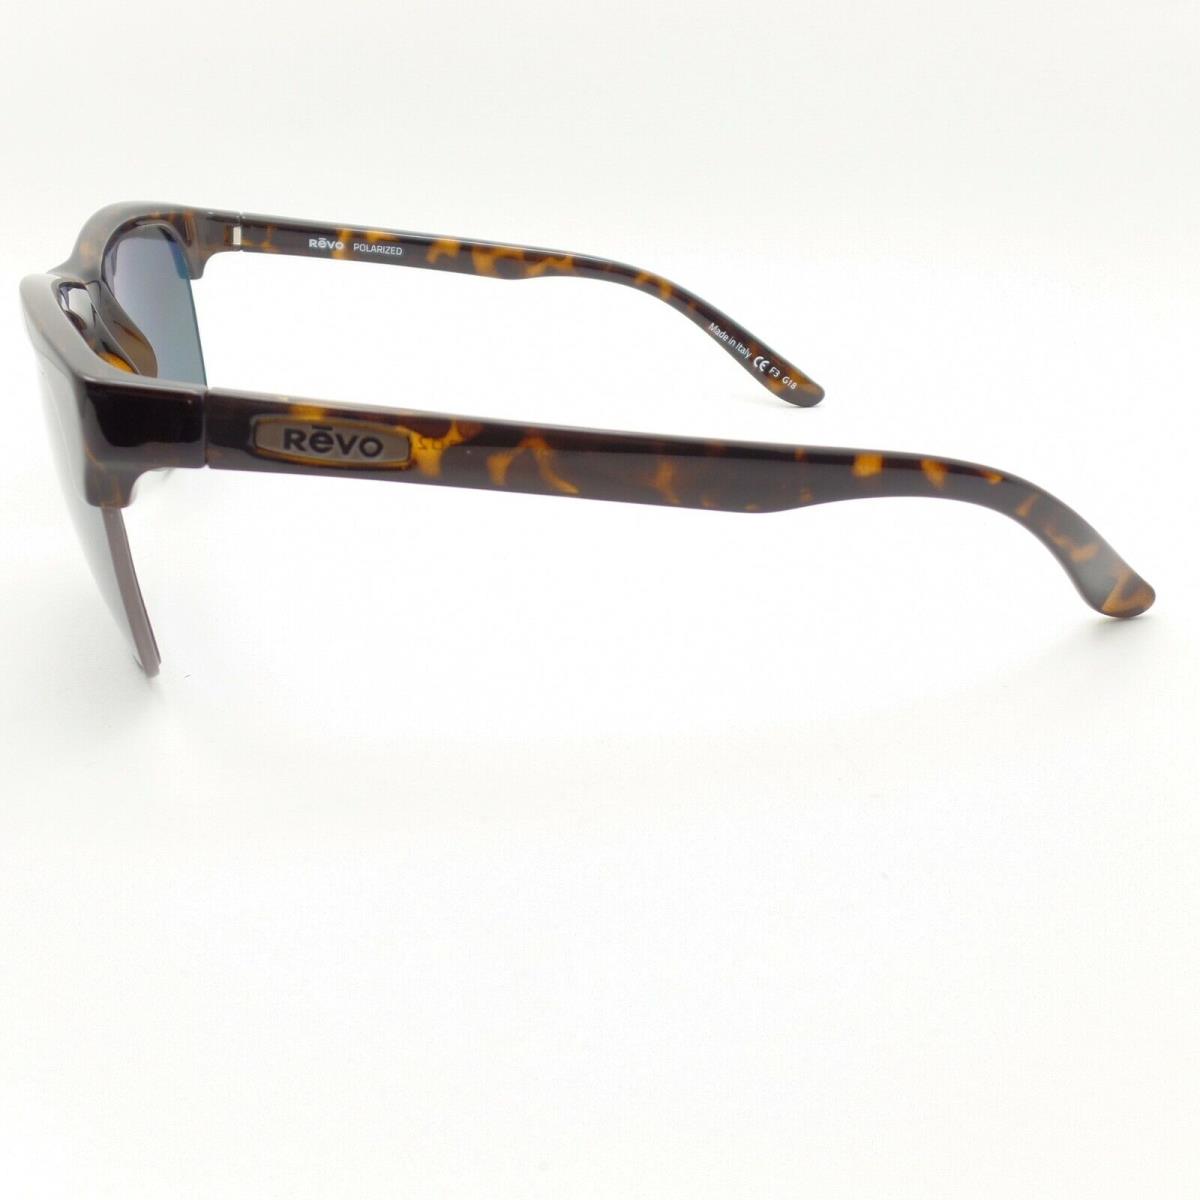 Revo sunglasses  - Tortoise Gun Frame, Graphite Mirror Lens